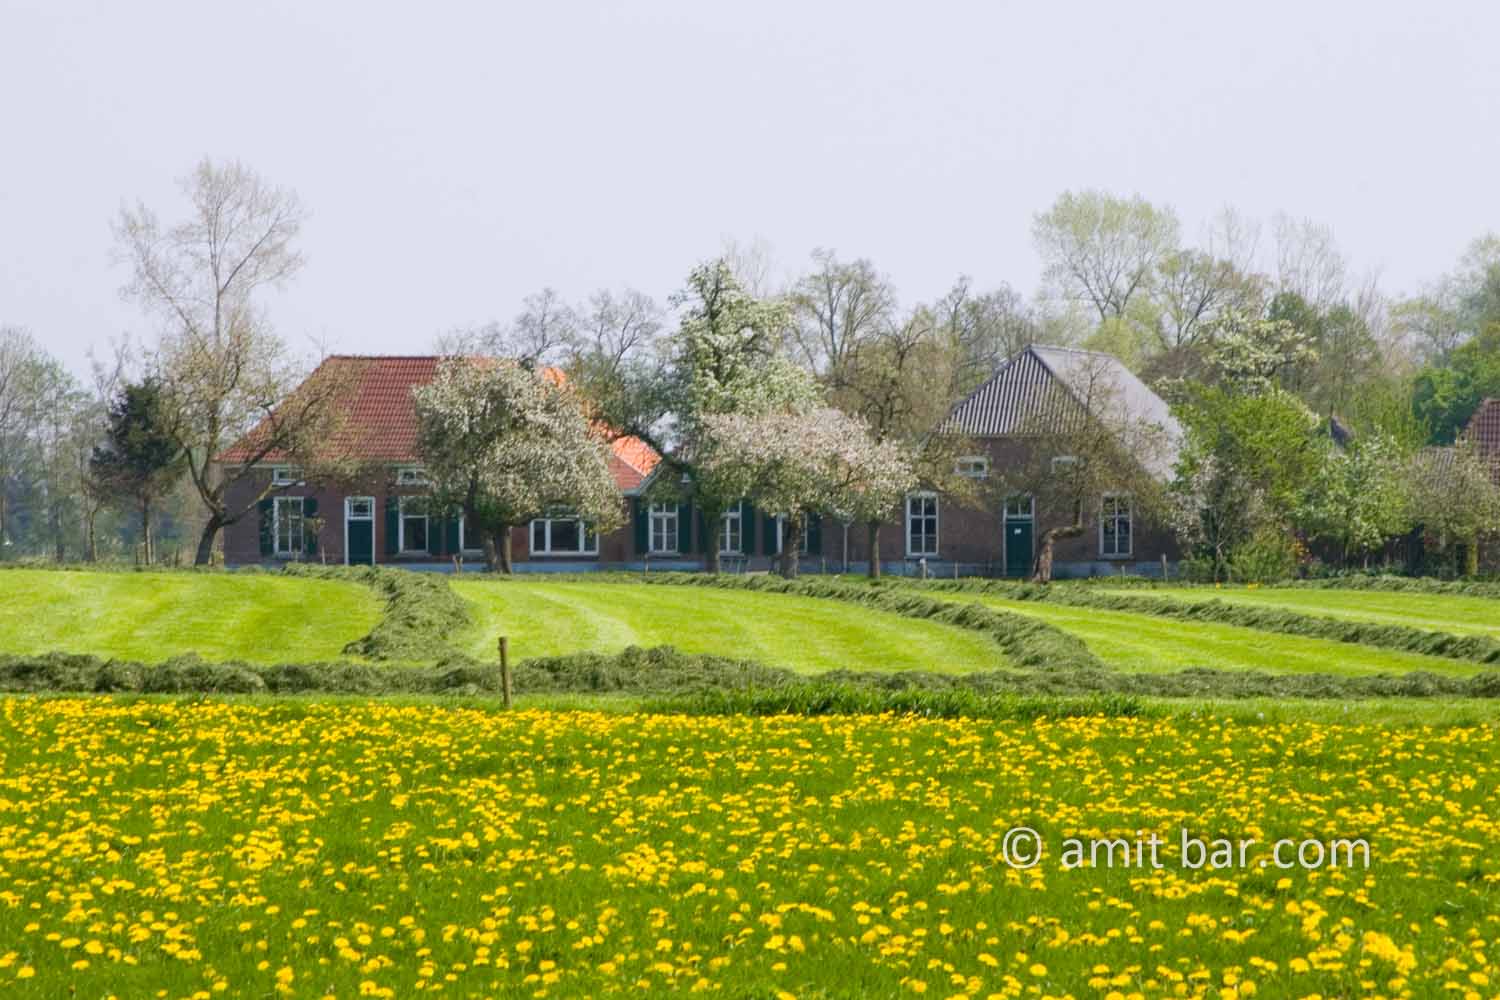 Dutch Spring: Farm house with dandelions: Farm house with dandelions in De Achterhoek, The Netherlands